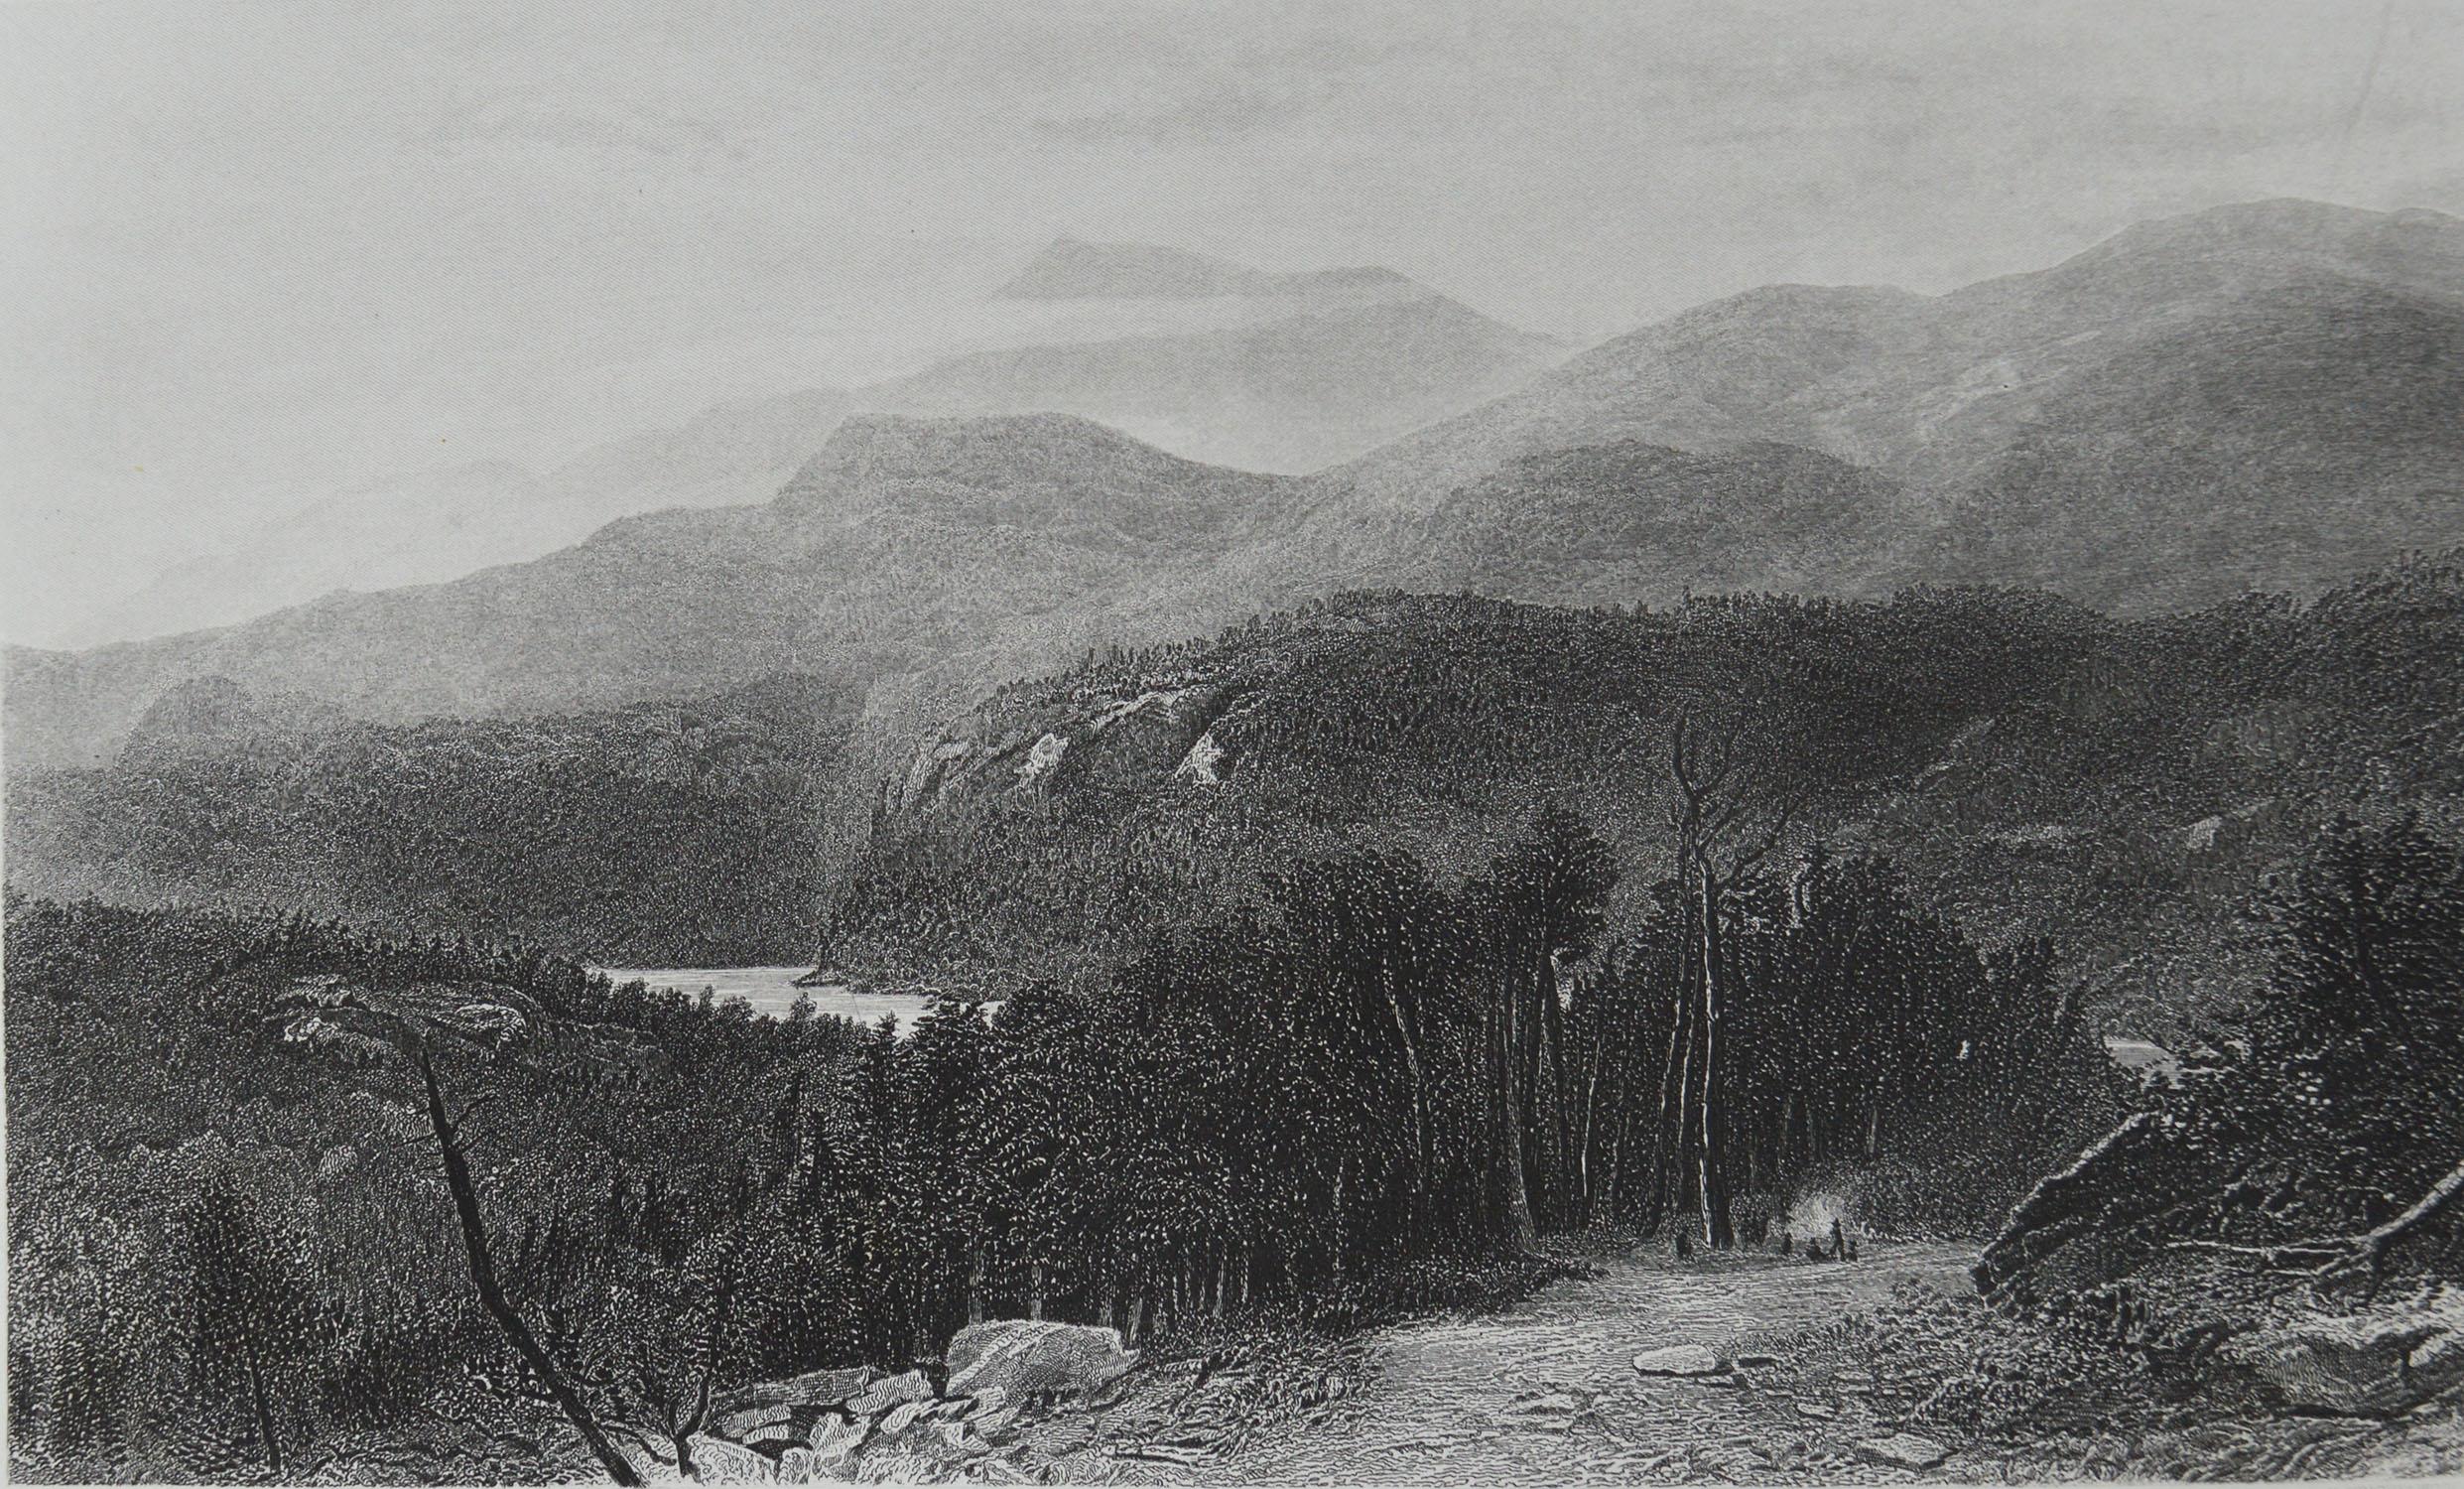 Other Original Antique Print of The Smoky Mountains, North Carolina, circa 1870